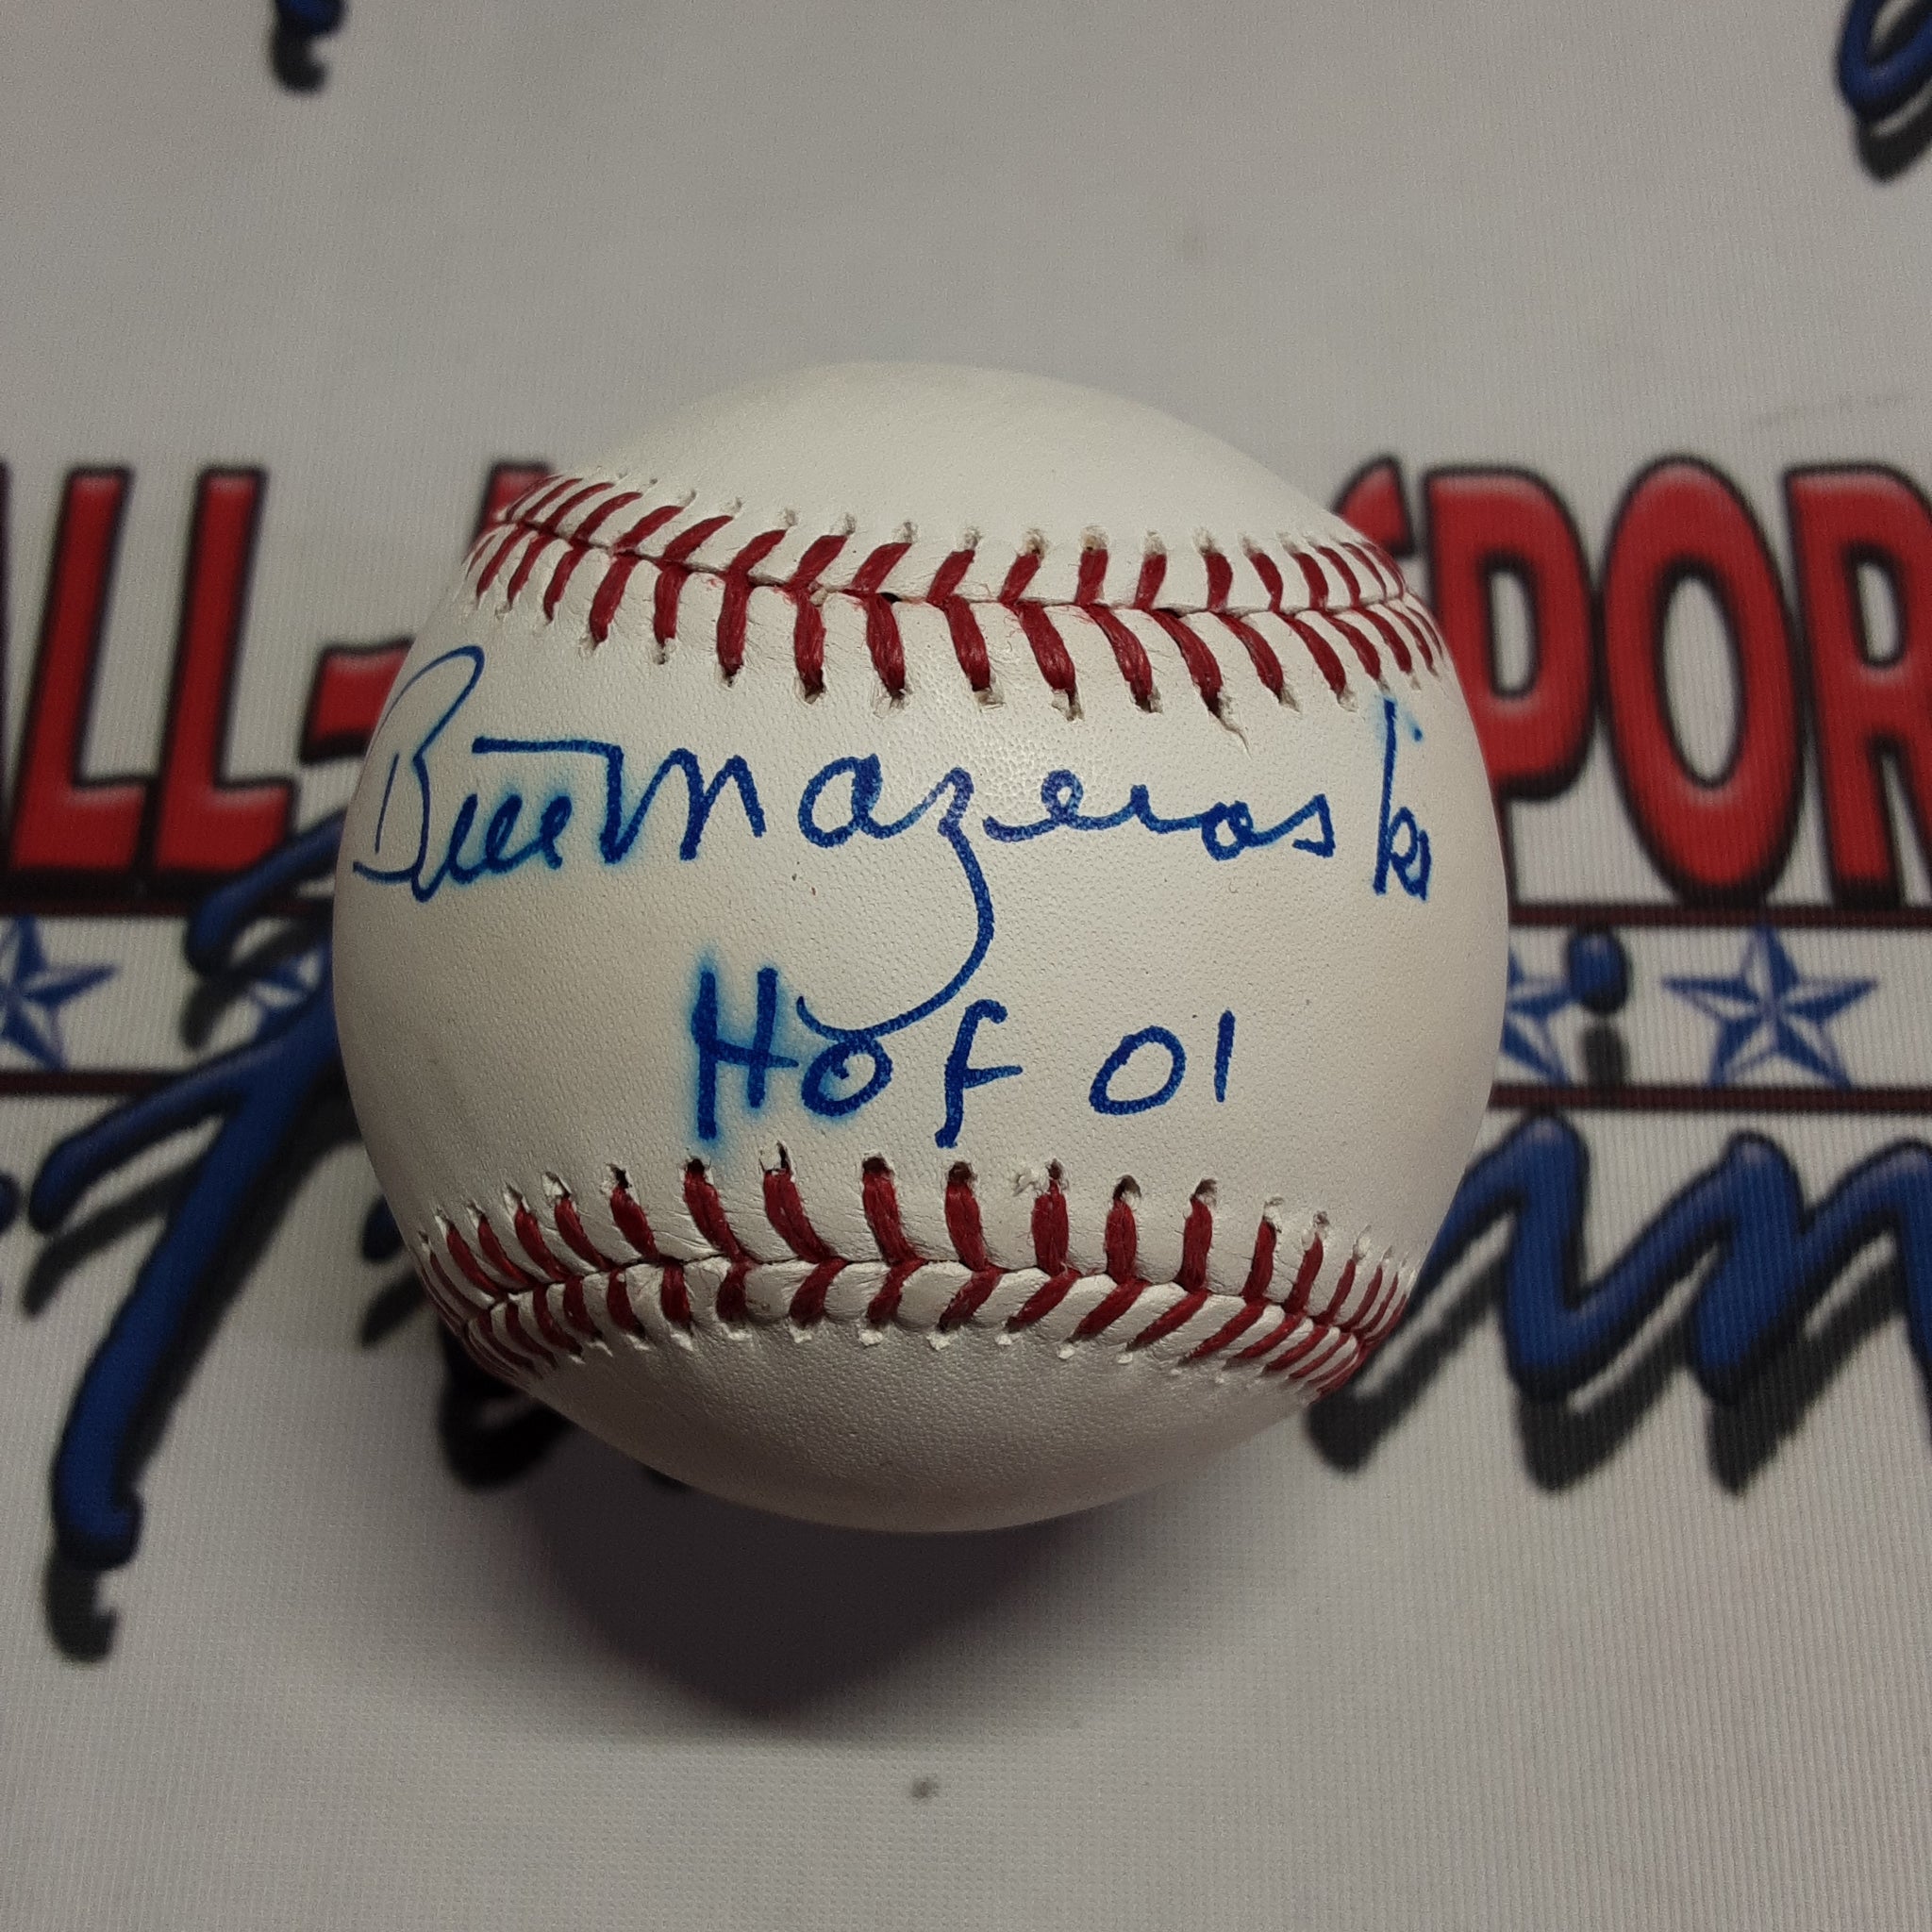 Bill Mazeroski Authentic Signed Baseball Autographed with Inscription JSA.